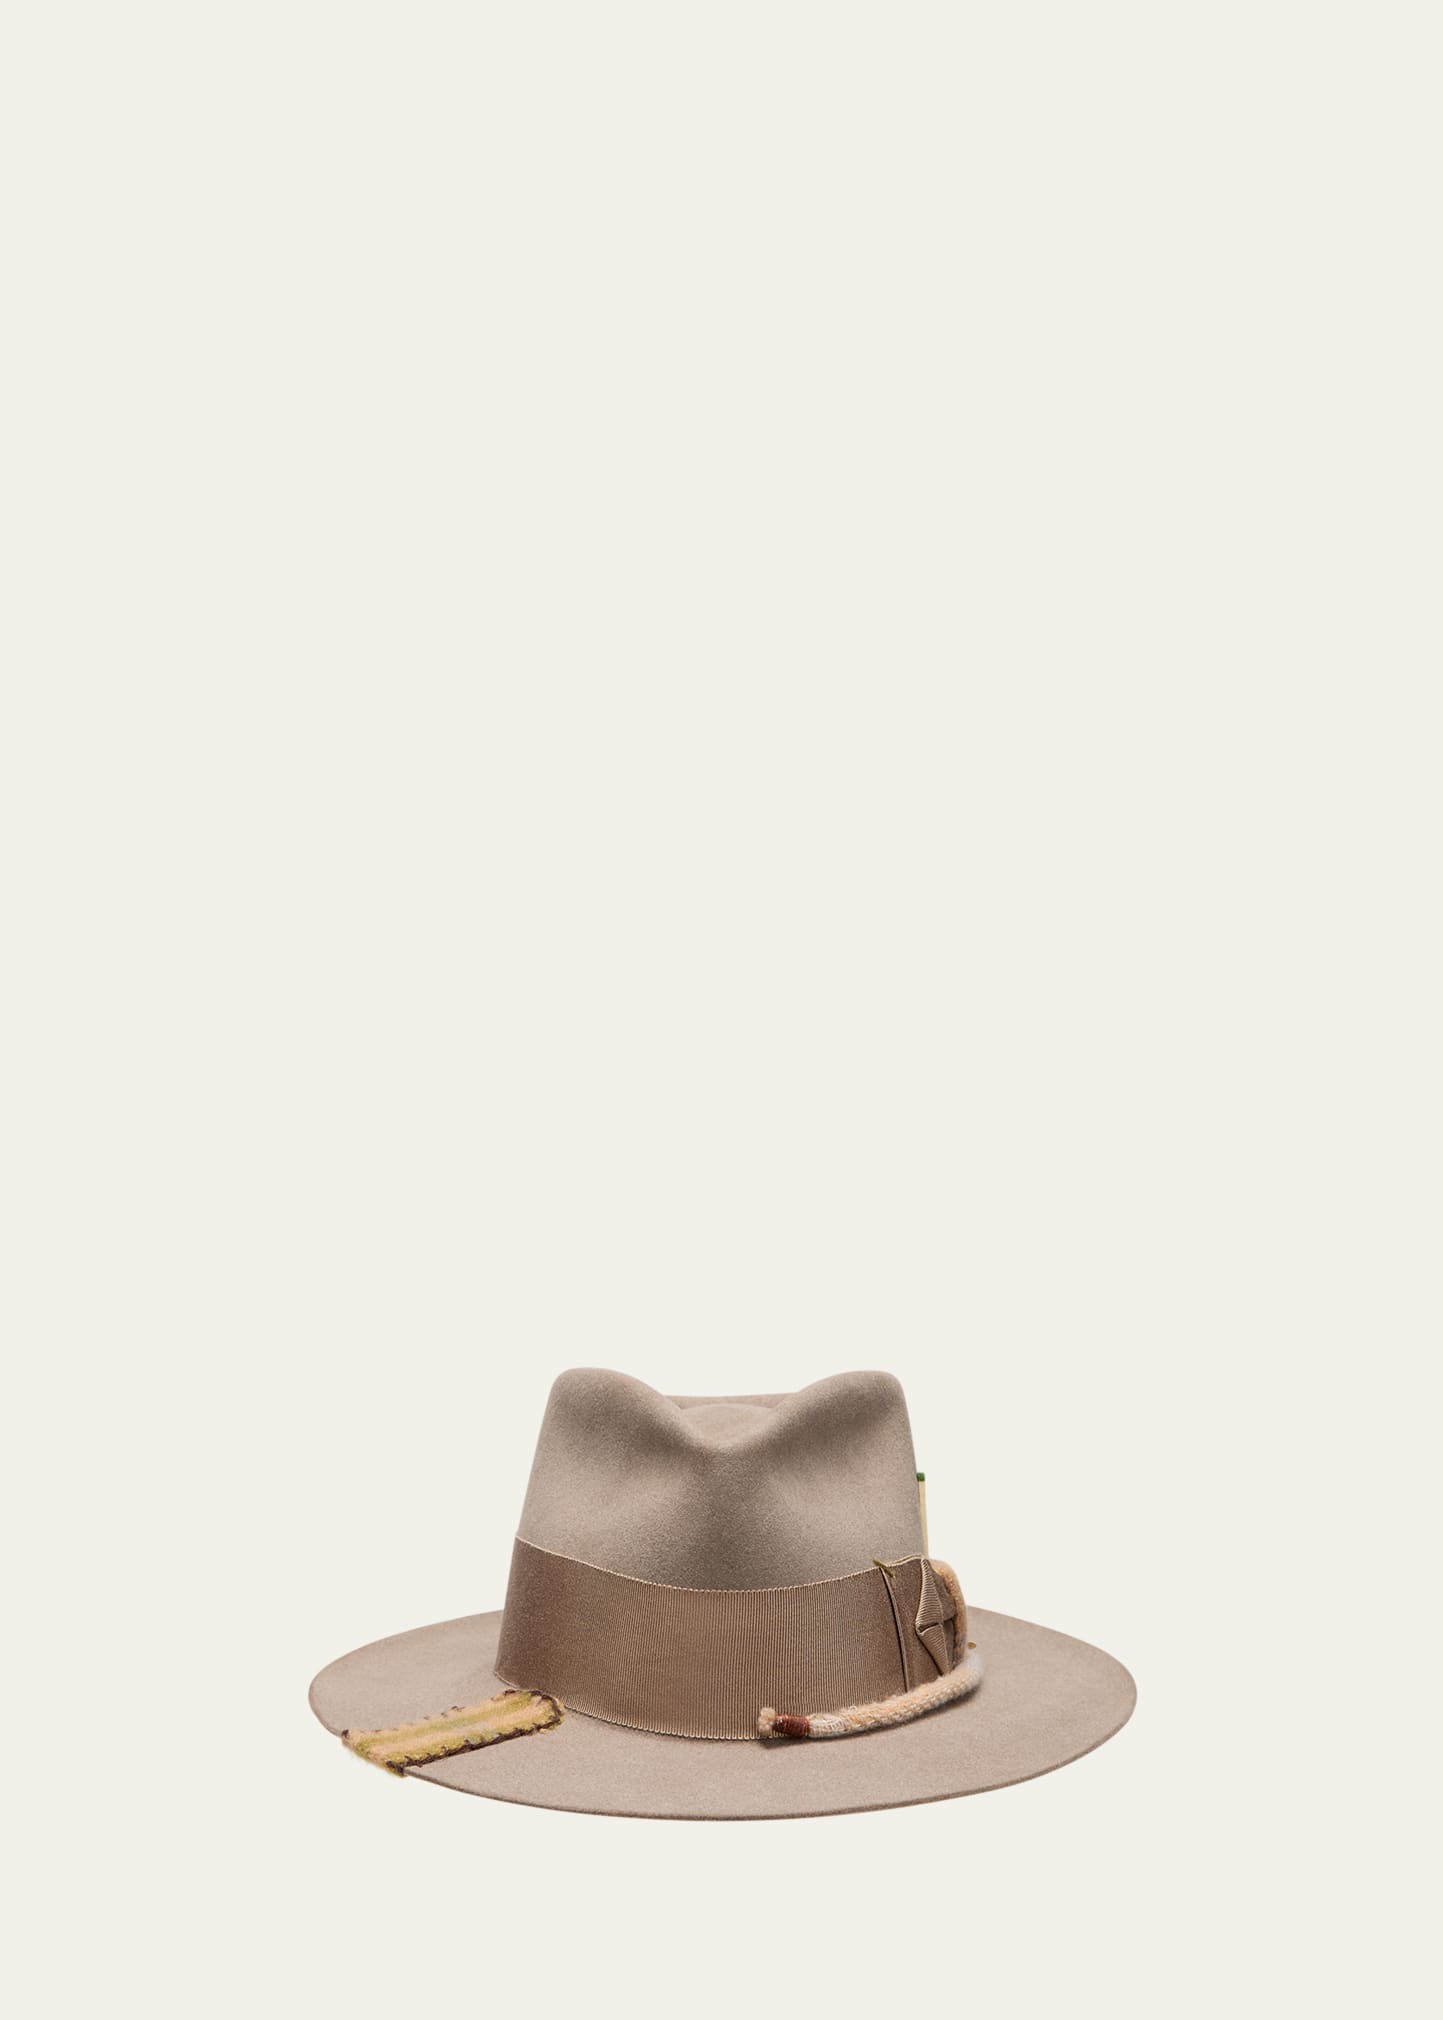 x Nick Fouquet Men's Fedora Hat